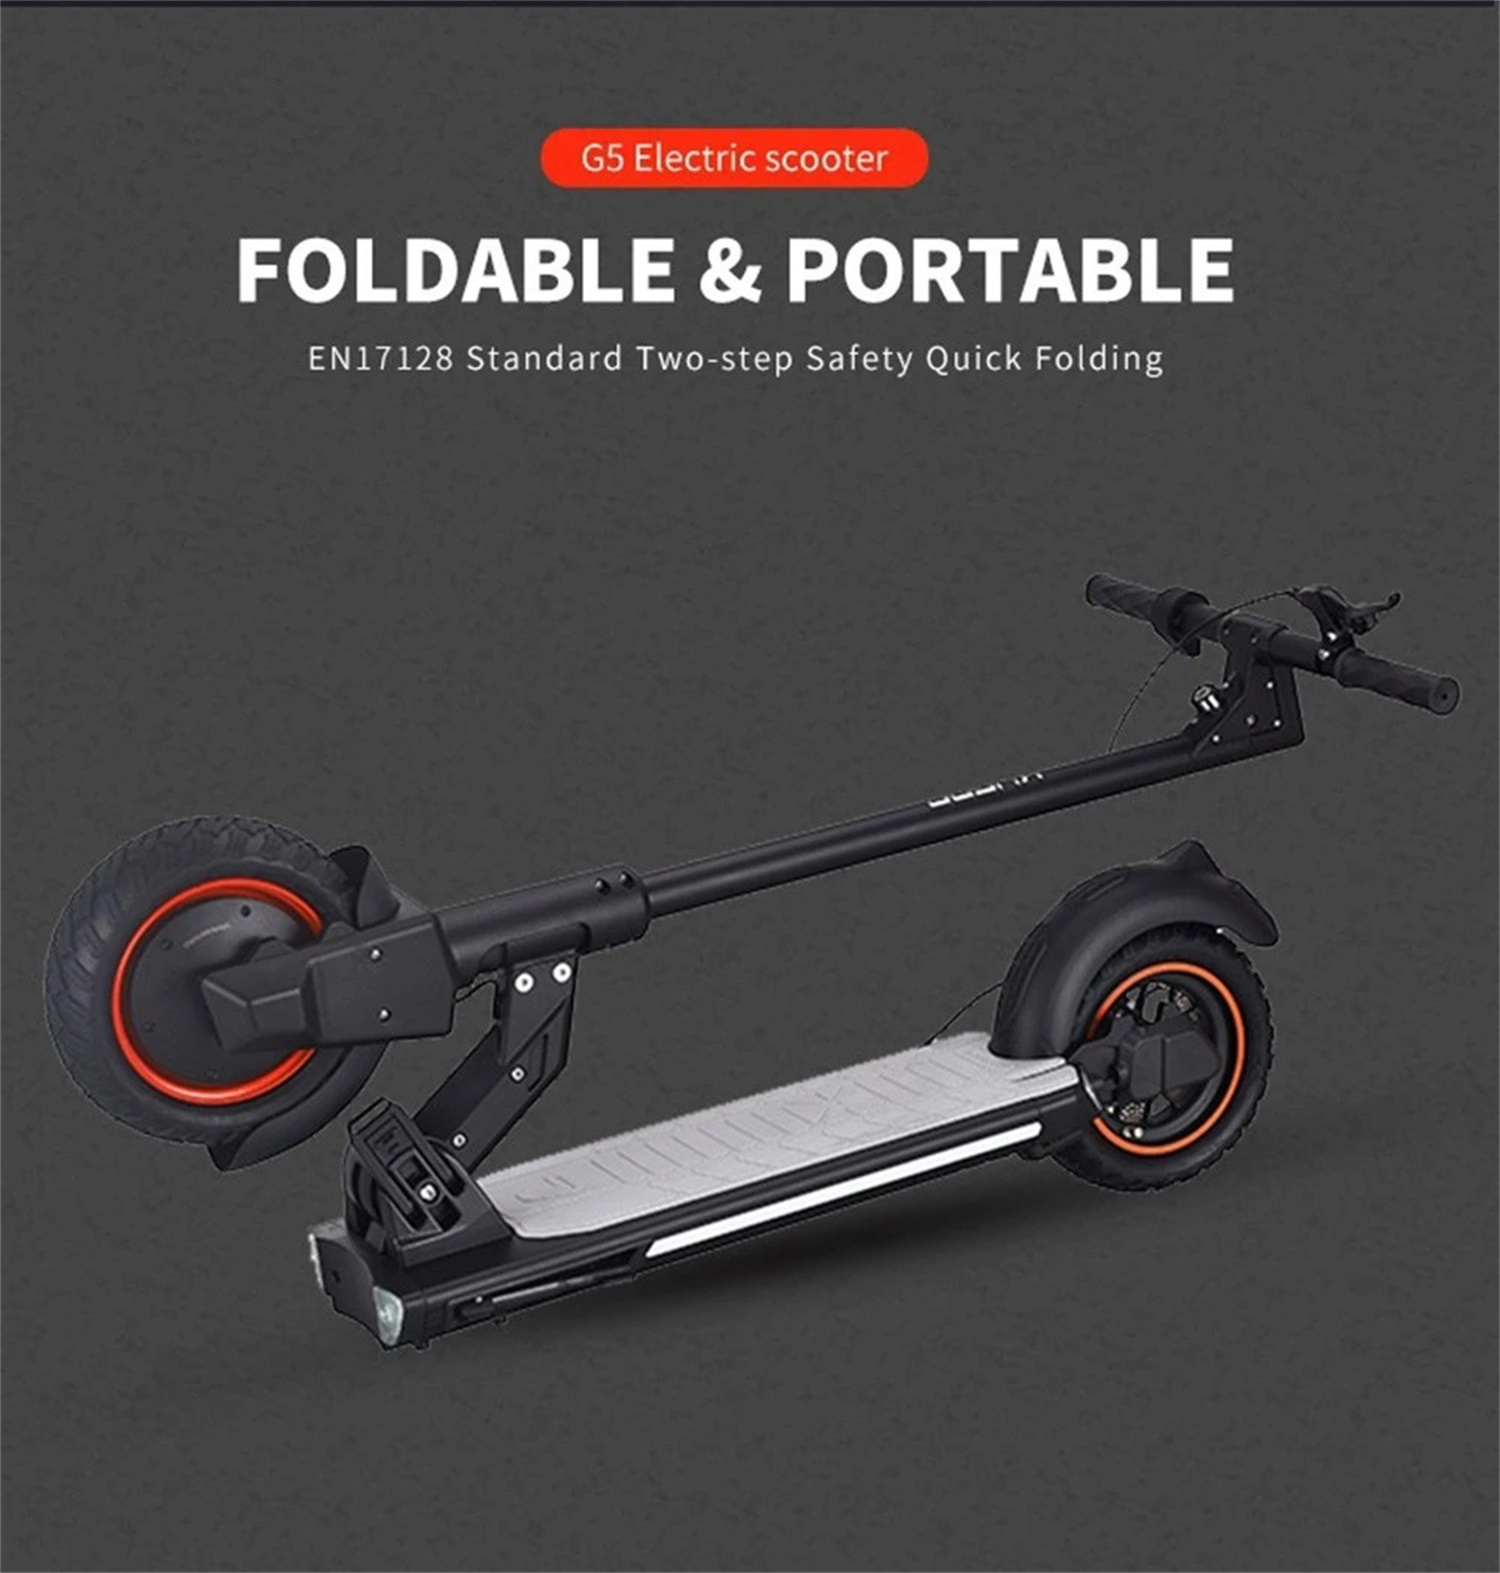 Foldable & Portable